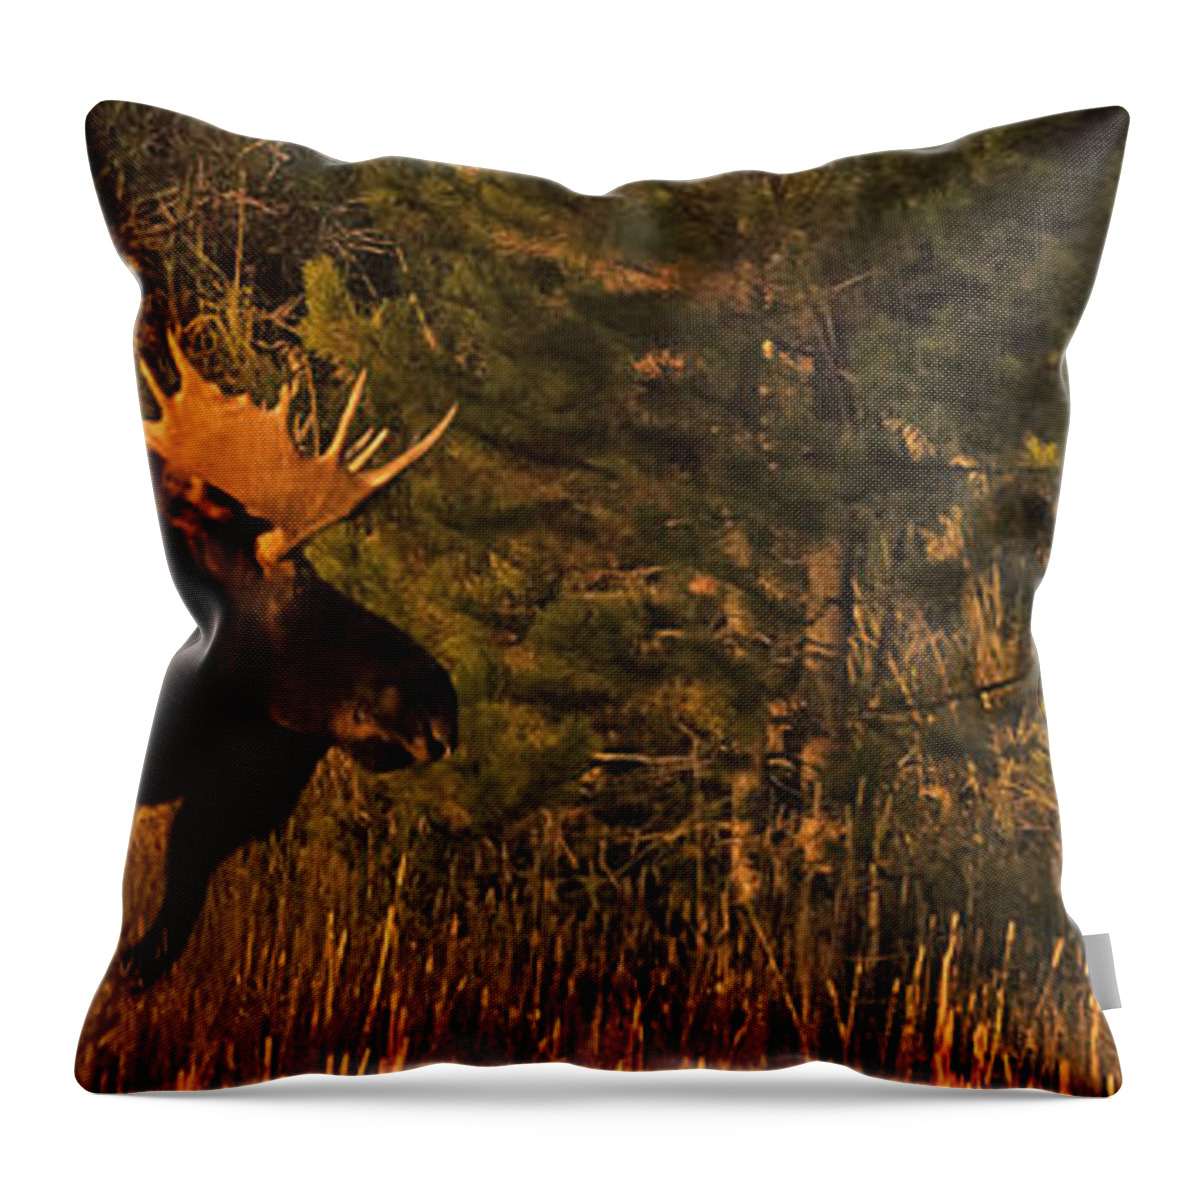 Rocky Mountain National Park Moose Throw Pillow featuring the photograph Rocky Mountain National Park Moose by Priscilla Burgers